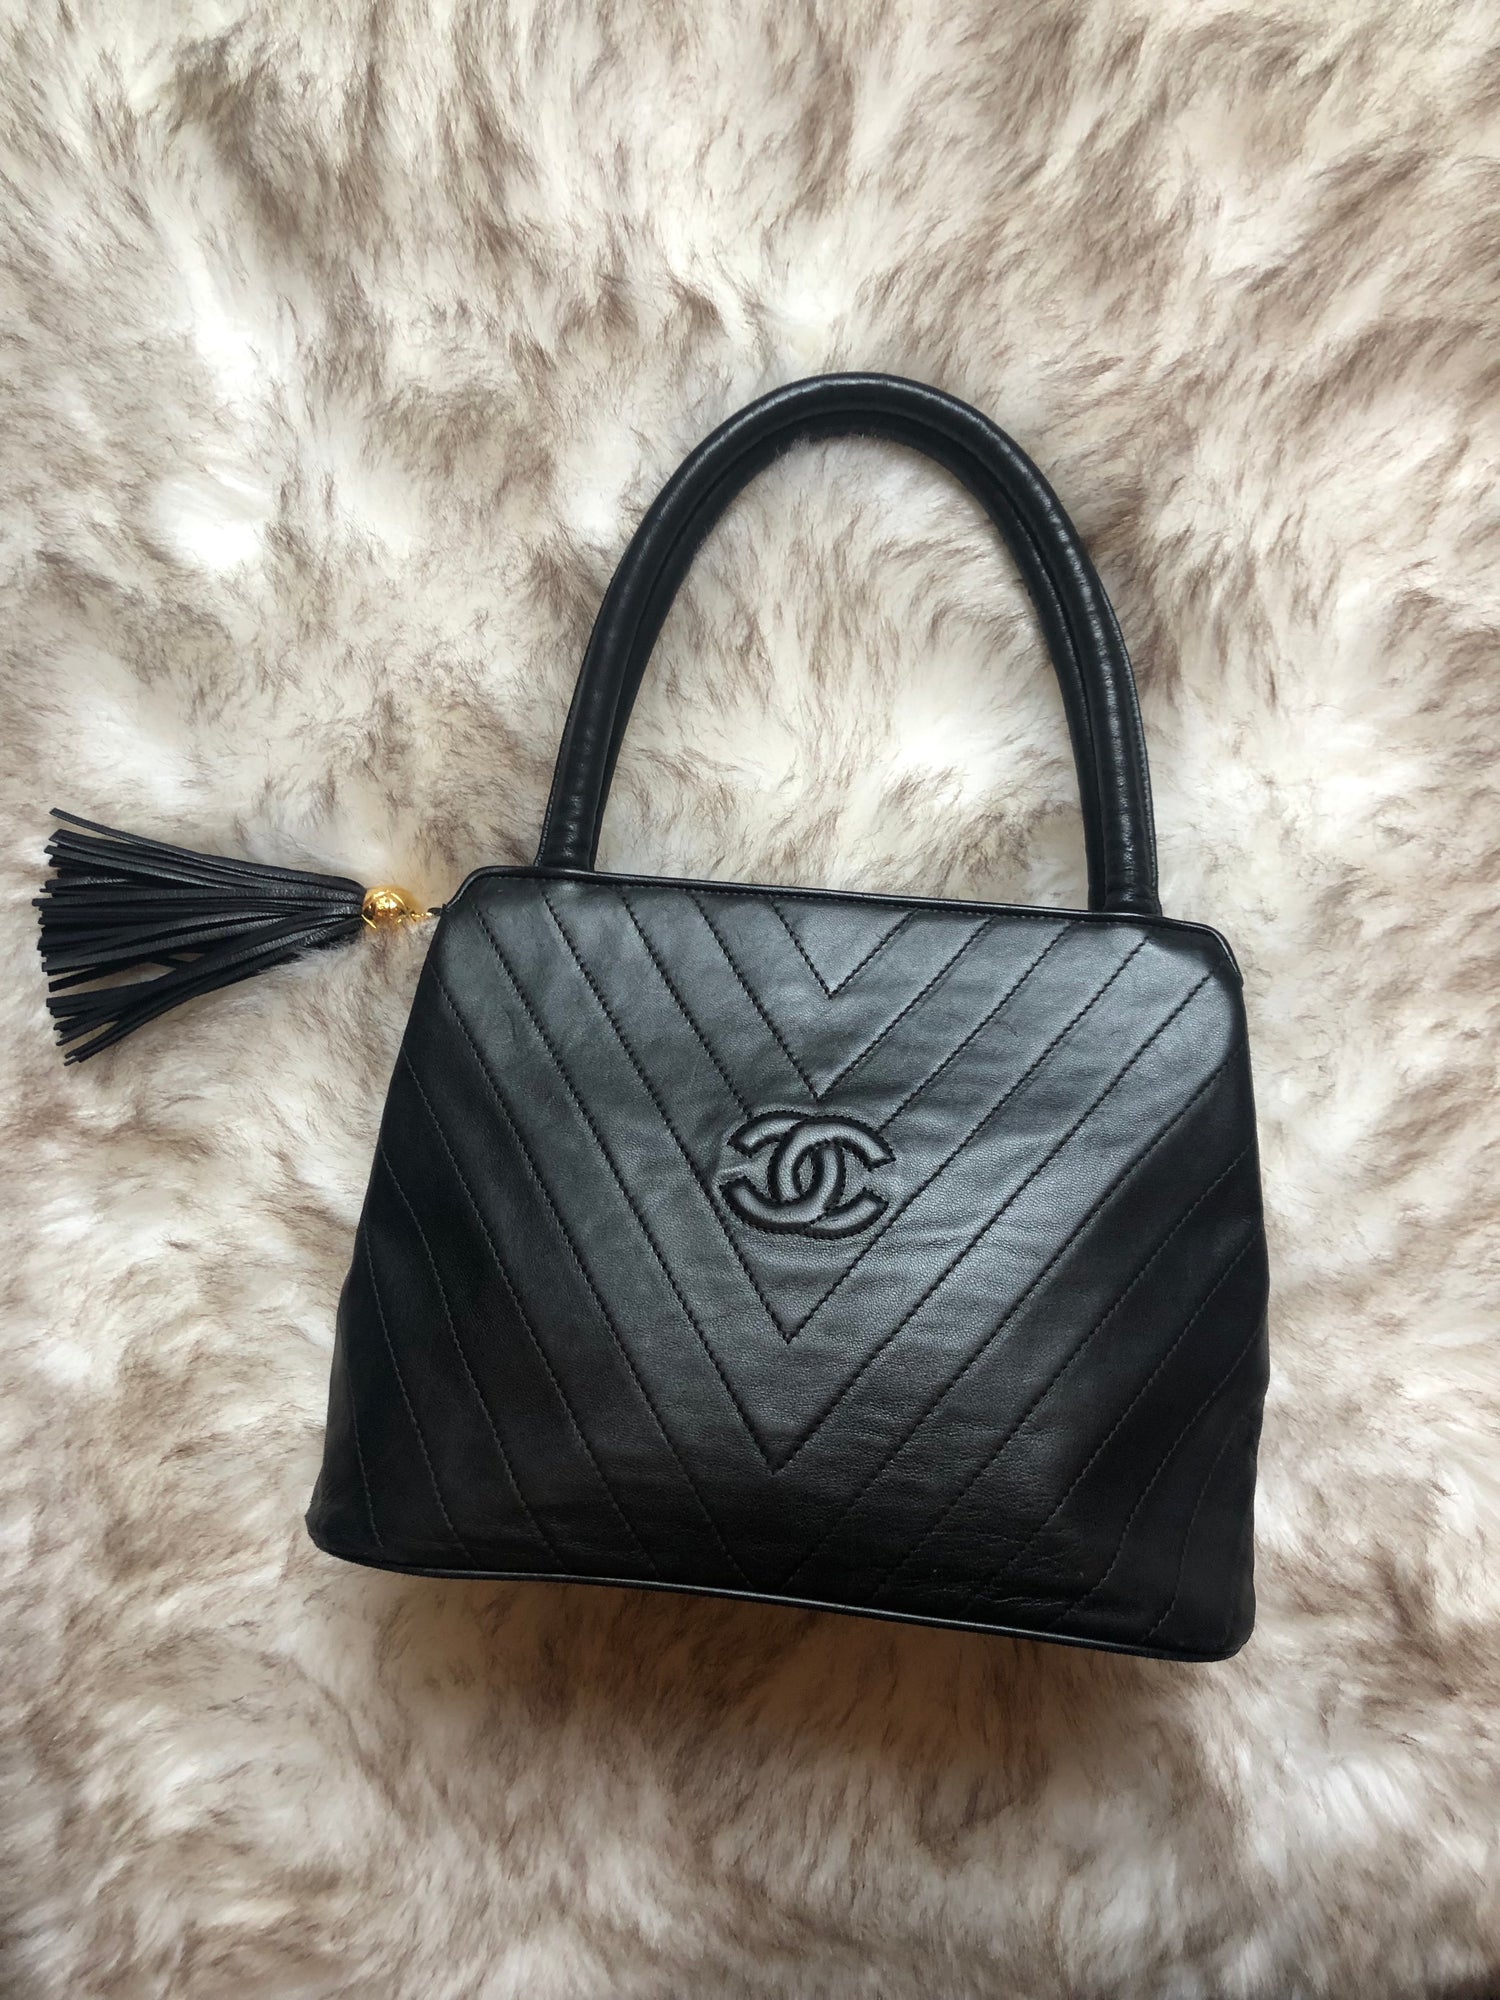 Chanel Vintage Chevron Black Tassel Bag